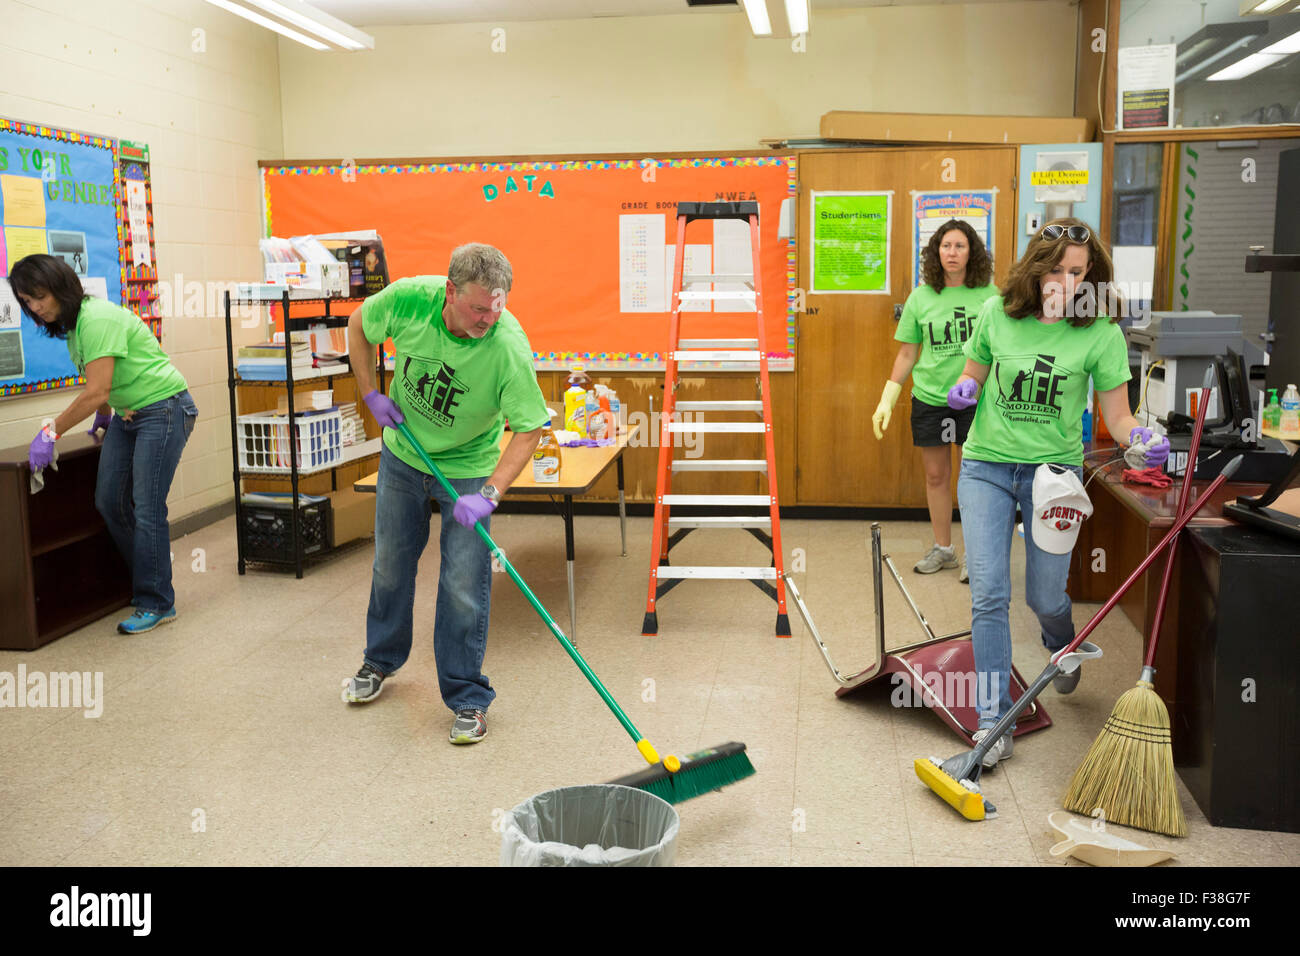 Detroit, Michigan - Volunteers clean and renovate classrooms at Osborn High School. Stock Photo